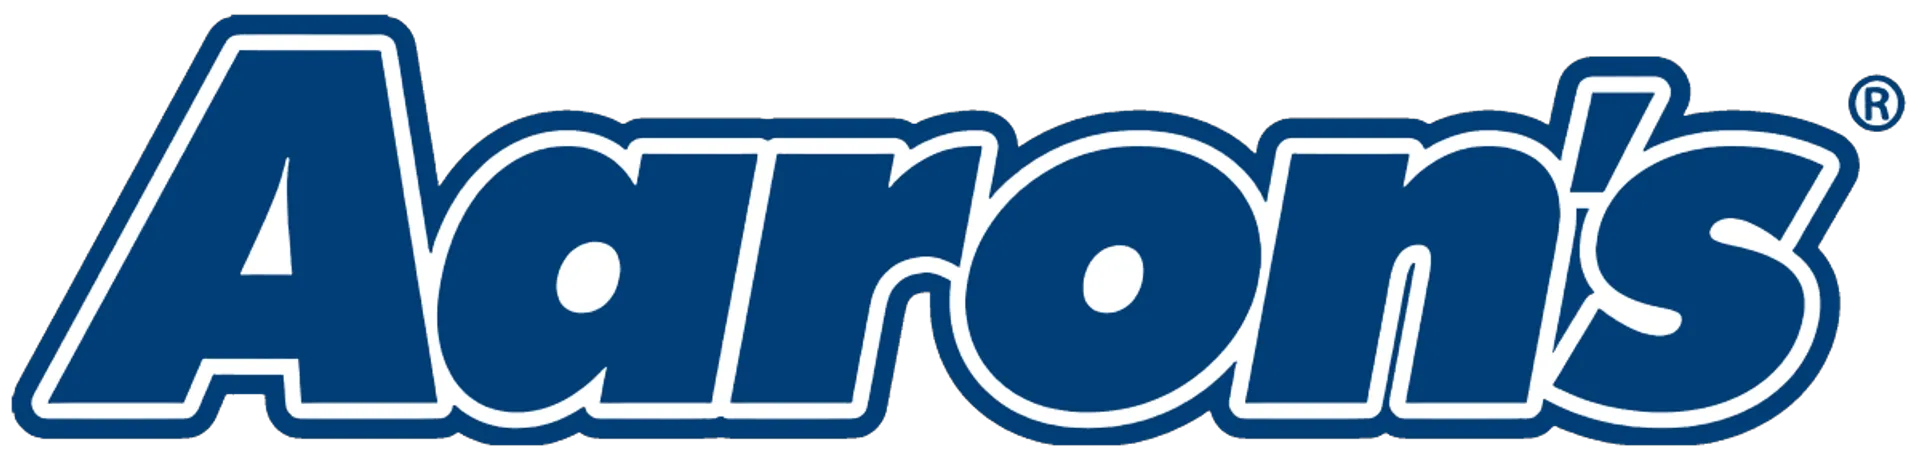 AARON'S logo